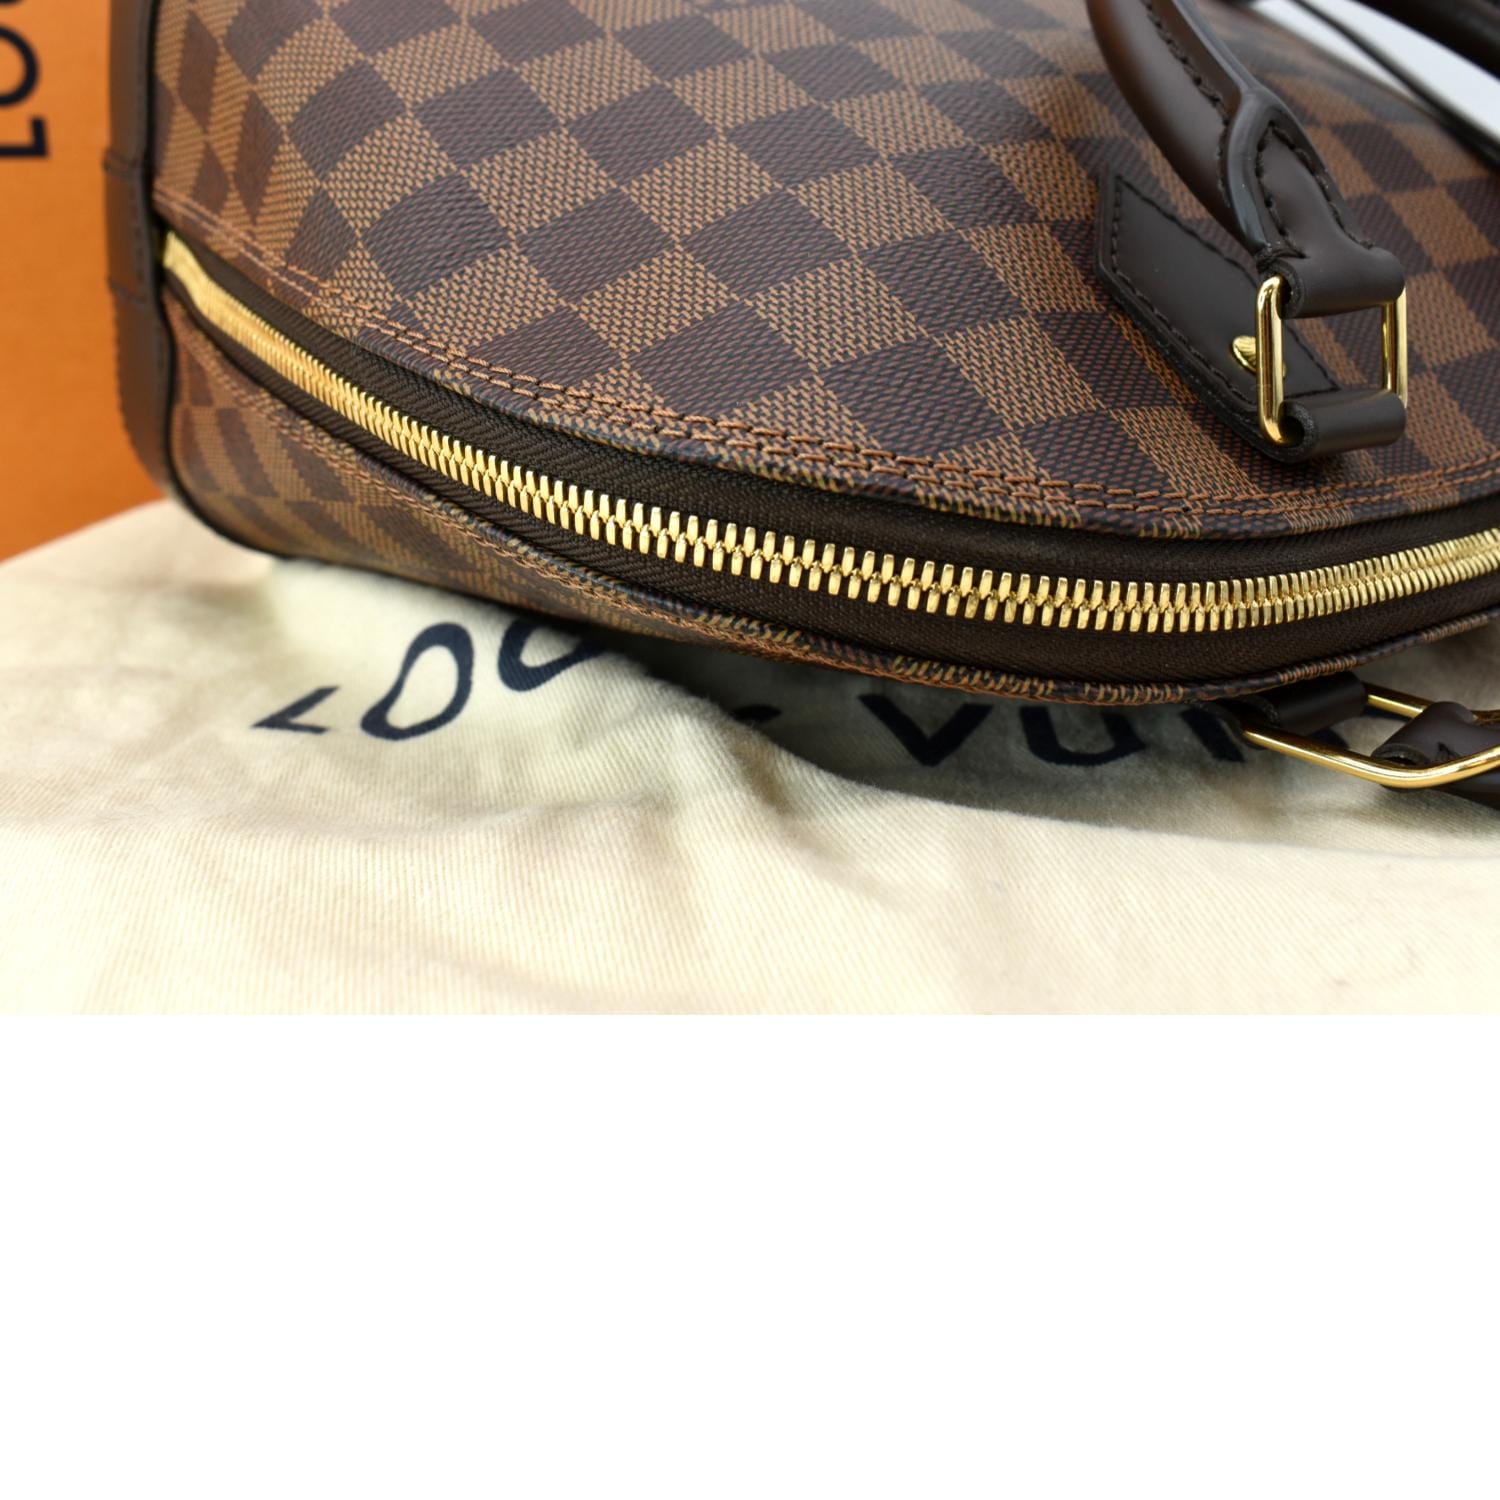 Louis Vuitton Alma Pm Damier Ebene Leather Canvas Handbag